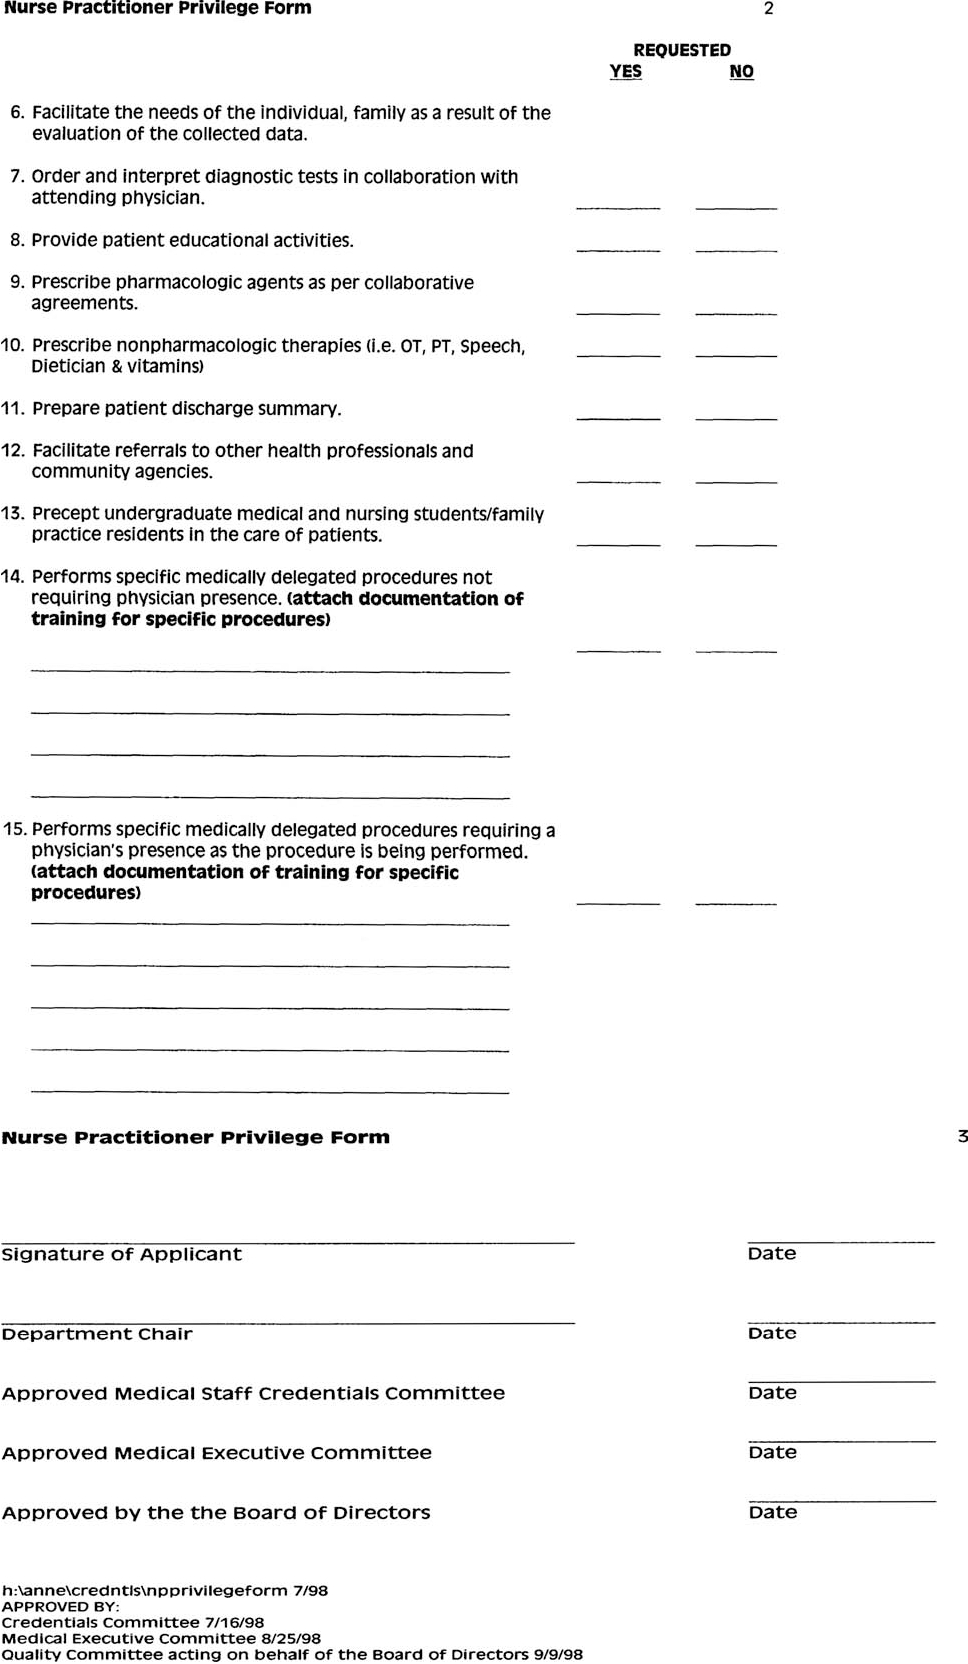 Collaborative Practice Agreement Nurse Practitioner Preparation For Negotiating Scope Of Practice For Acute Care Nurse